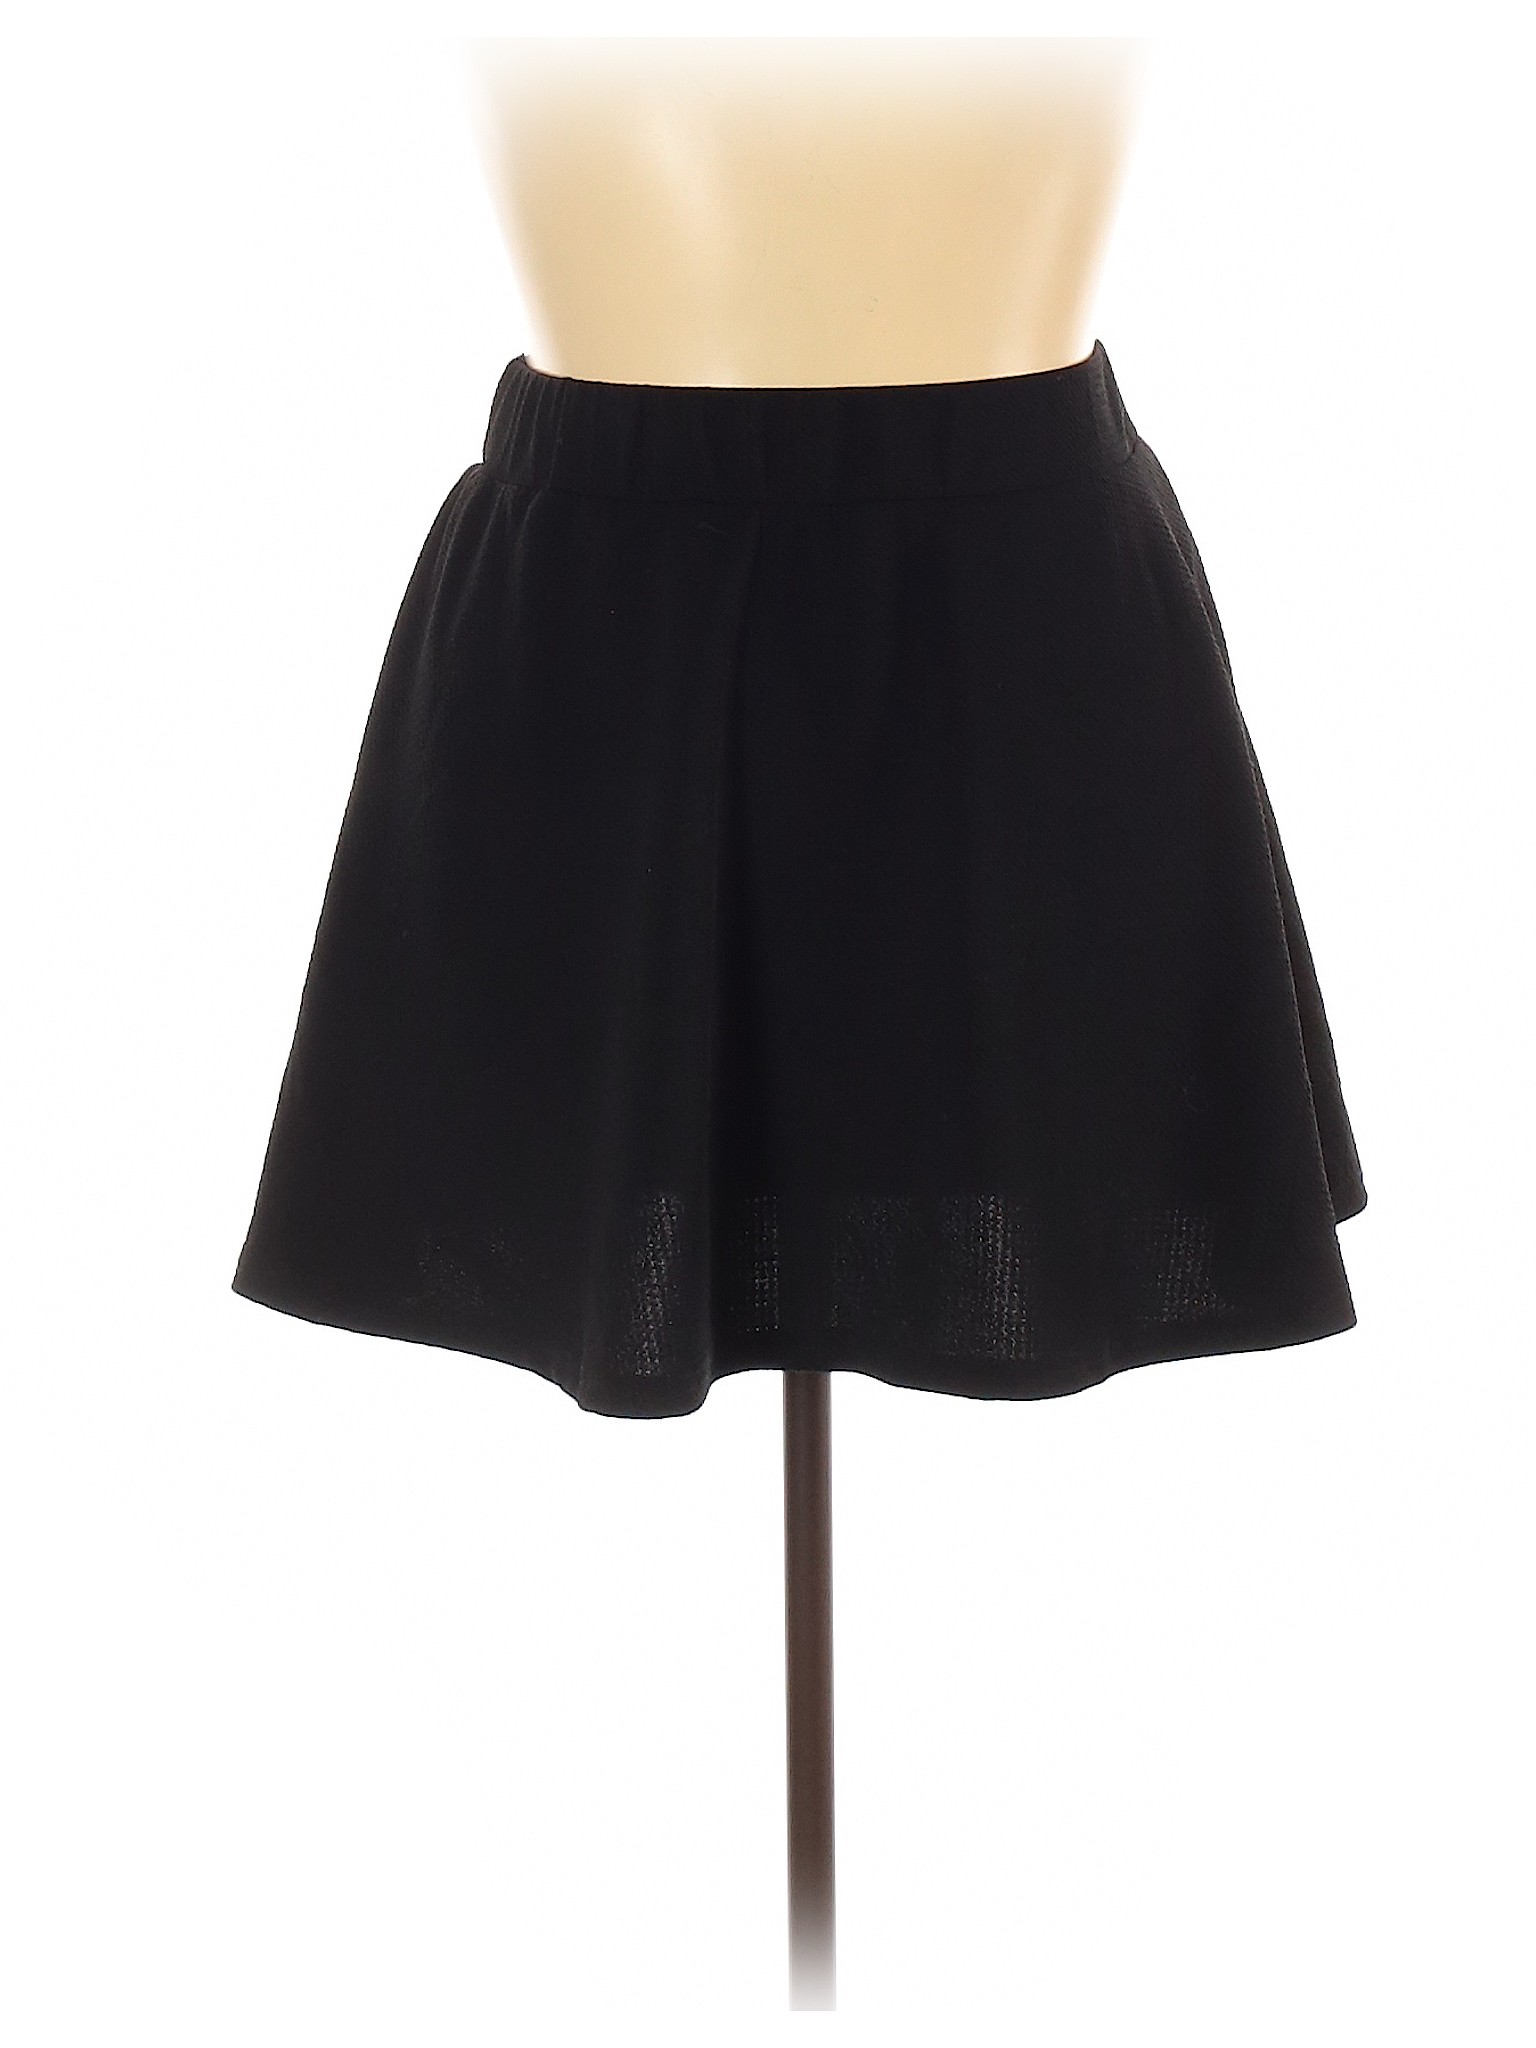 Shein Women Black Casual Skirt XL | eBay